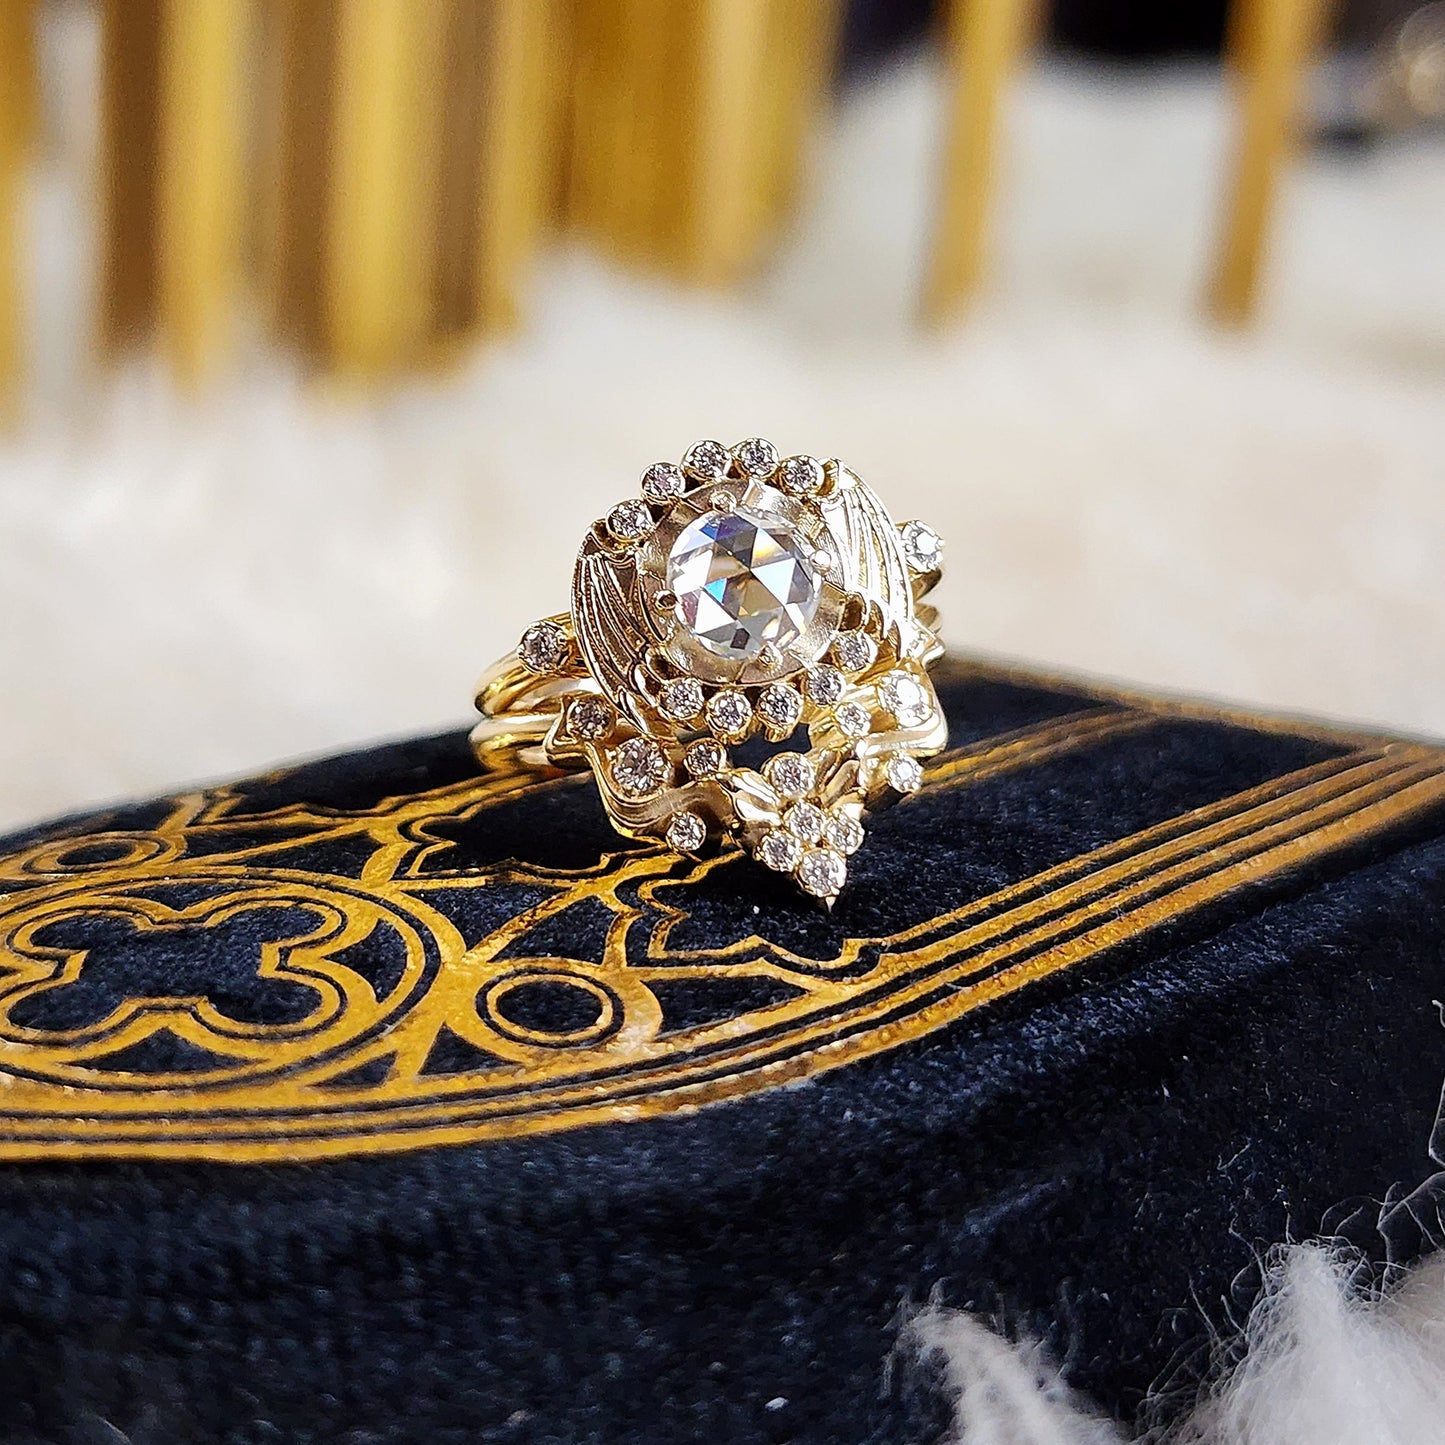 bat wing engagement ring with nagini double snake weding band diamonds rose cut moissanite 14k yellow gold